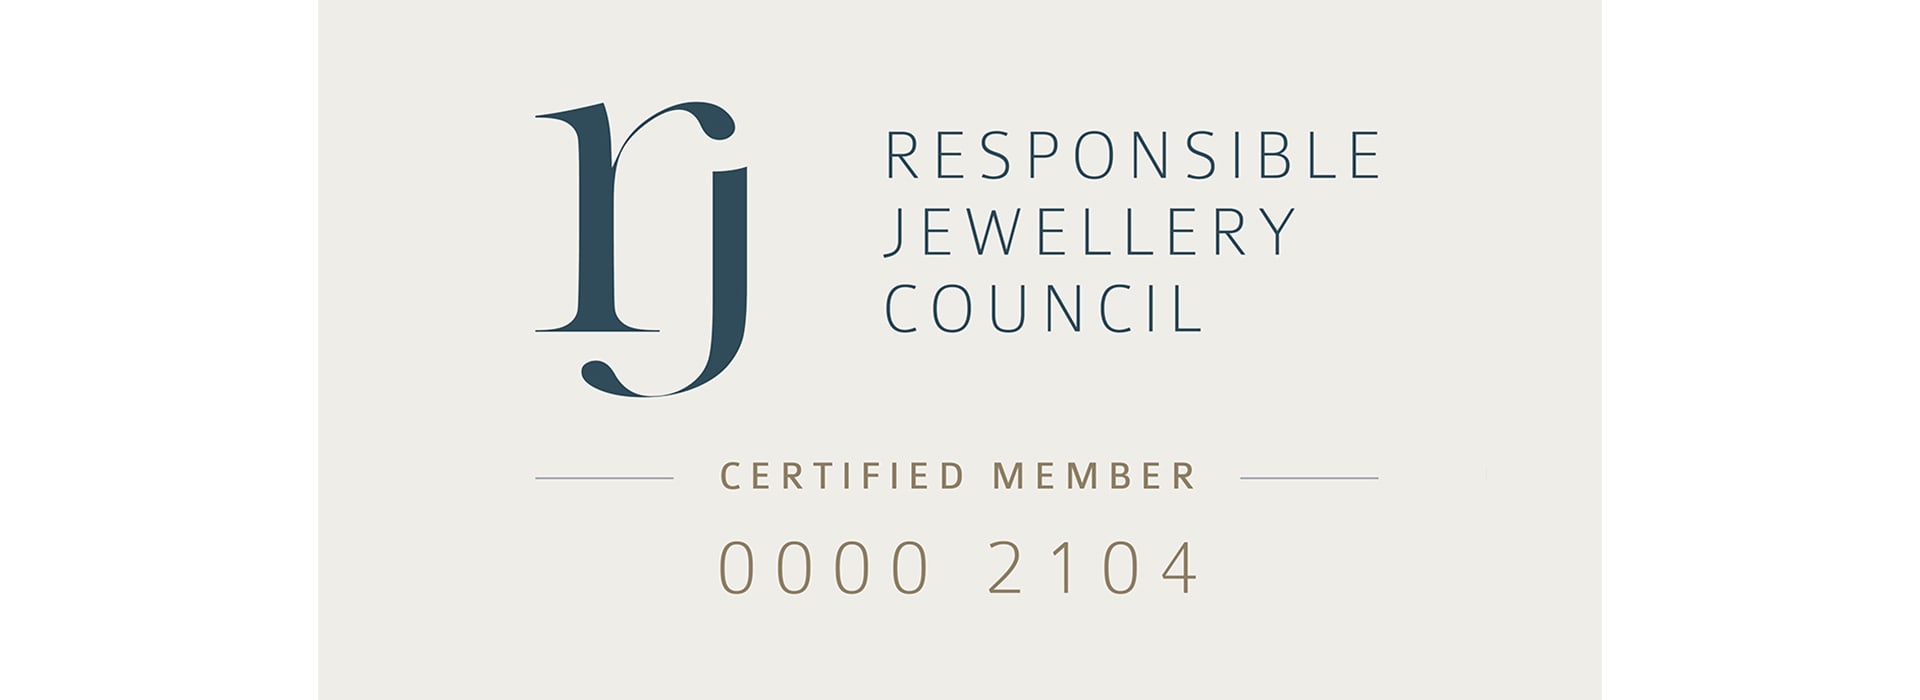 Certified member 00001127: the Responsible sourcing certificate.